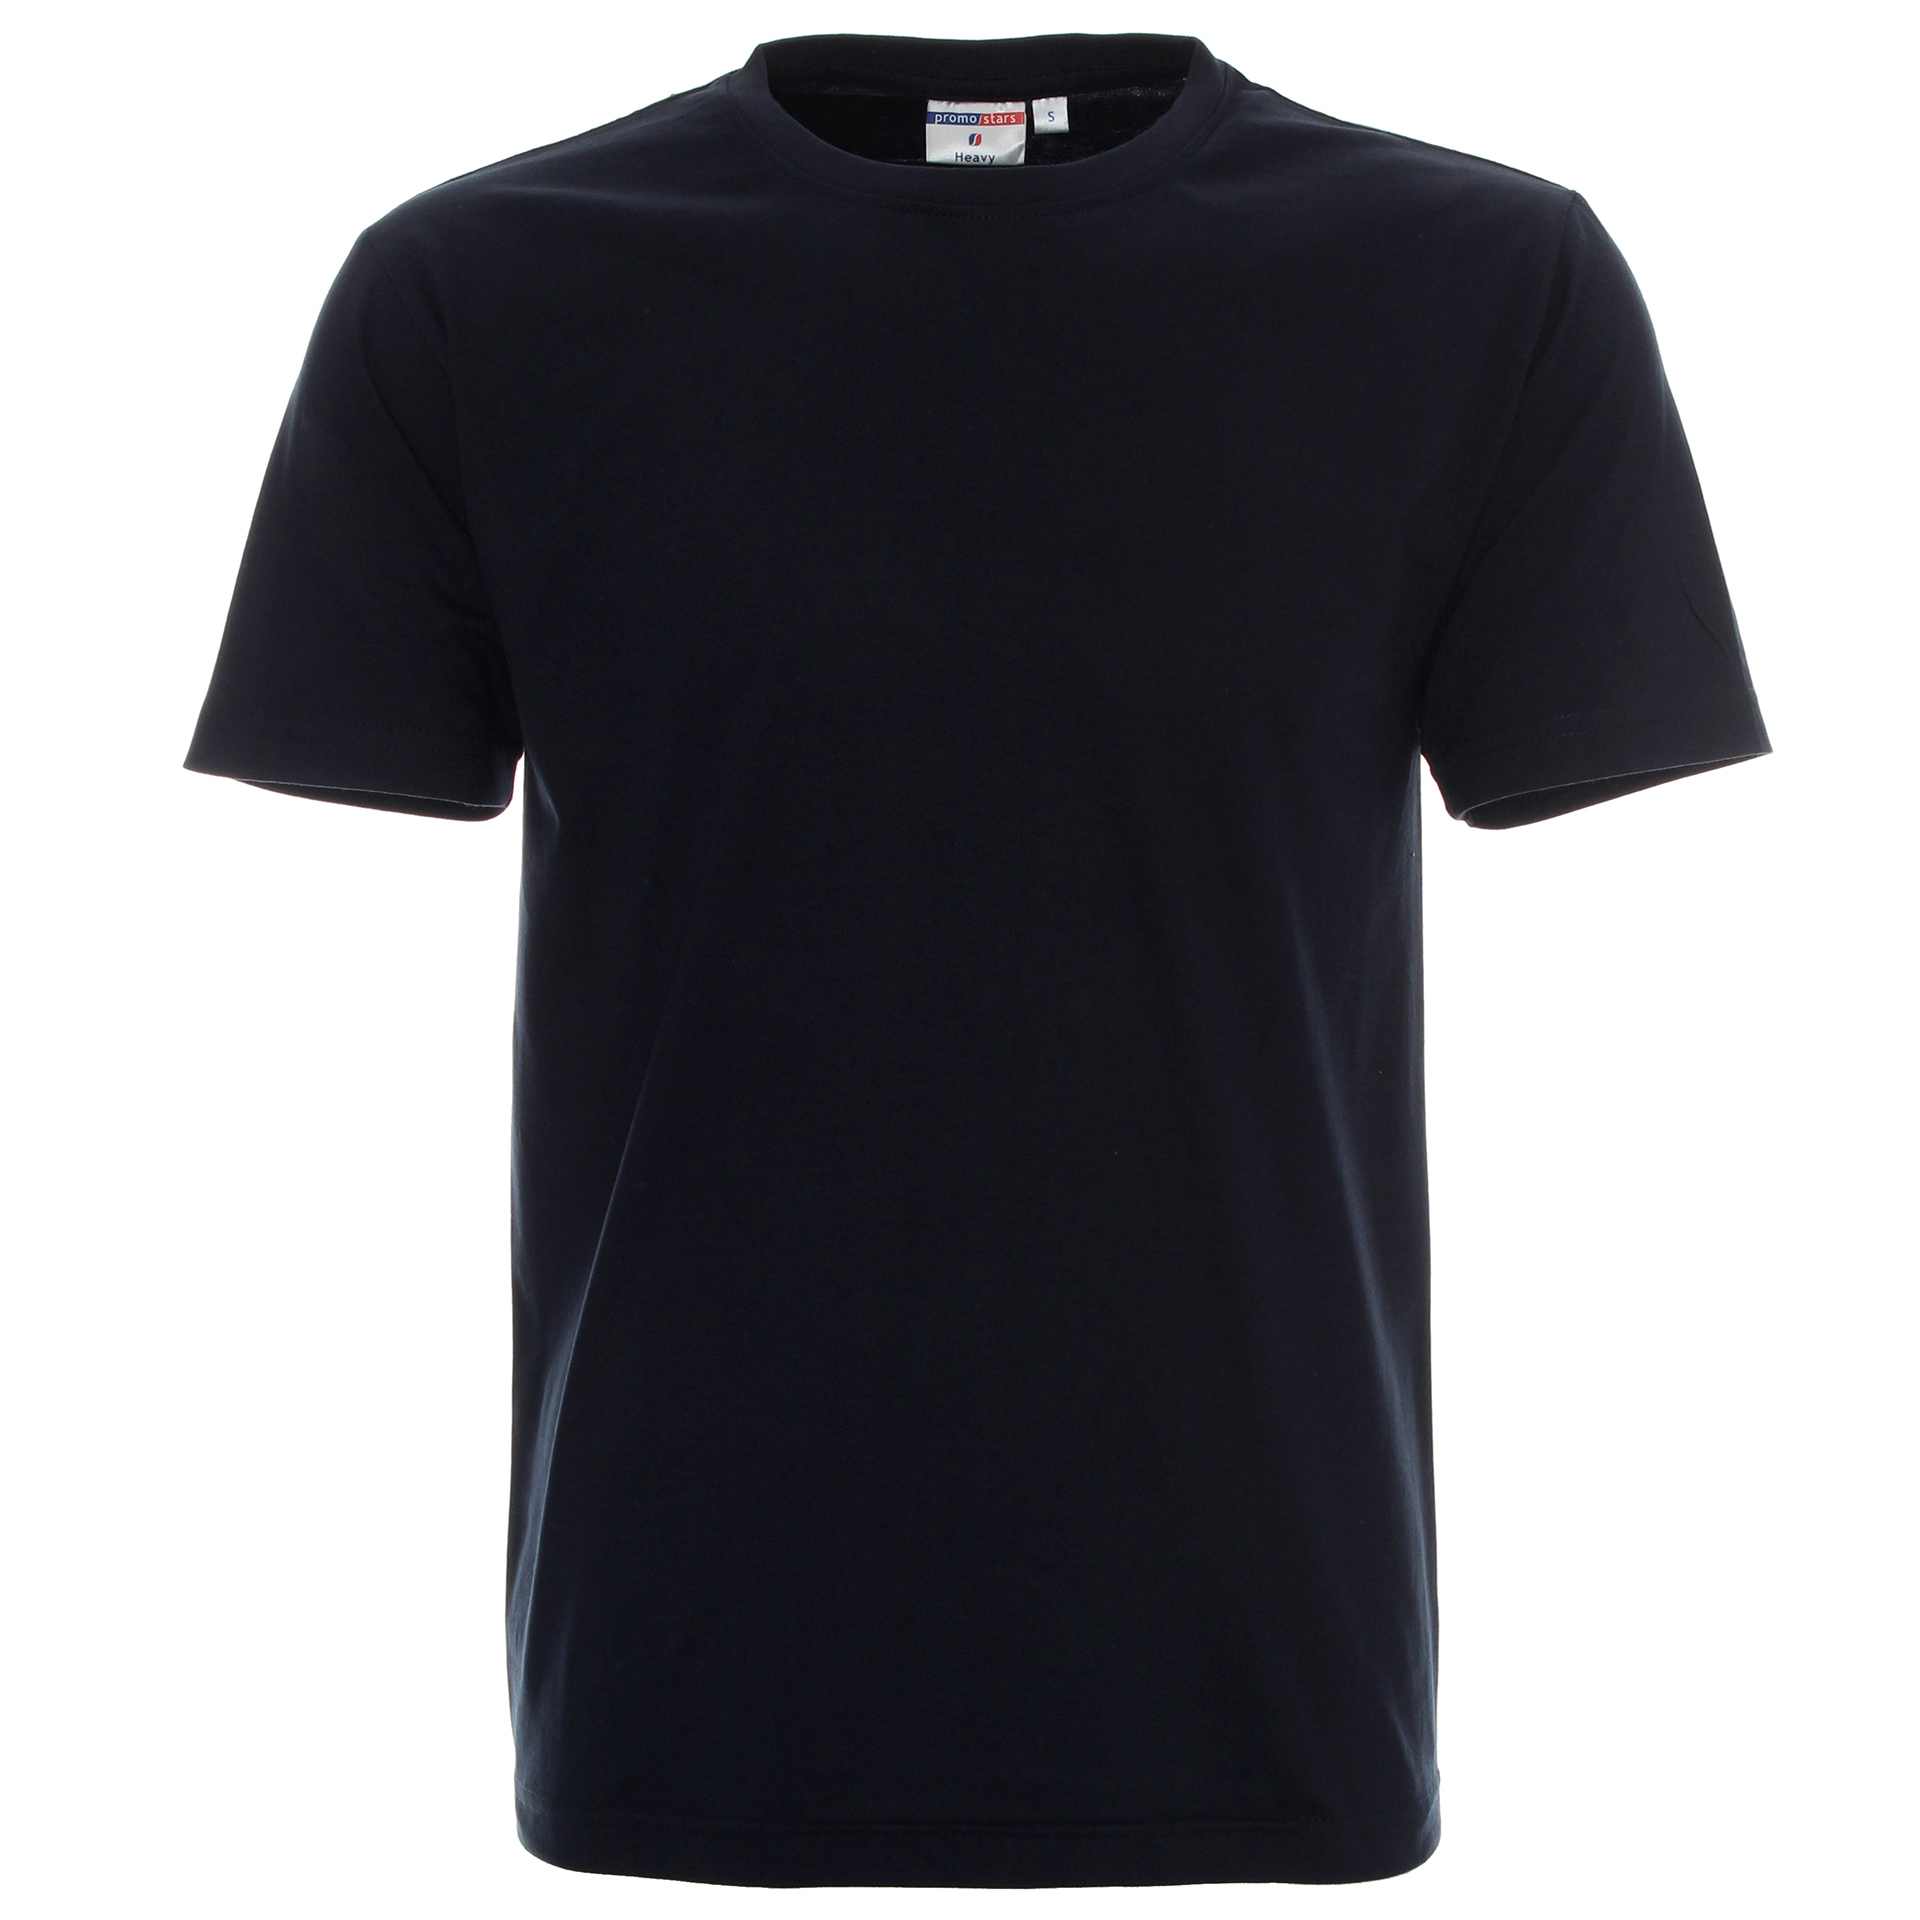 HEAVY 170 - t-shirt - advertising clothes Lpp-Printable